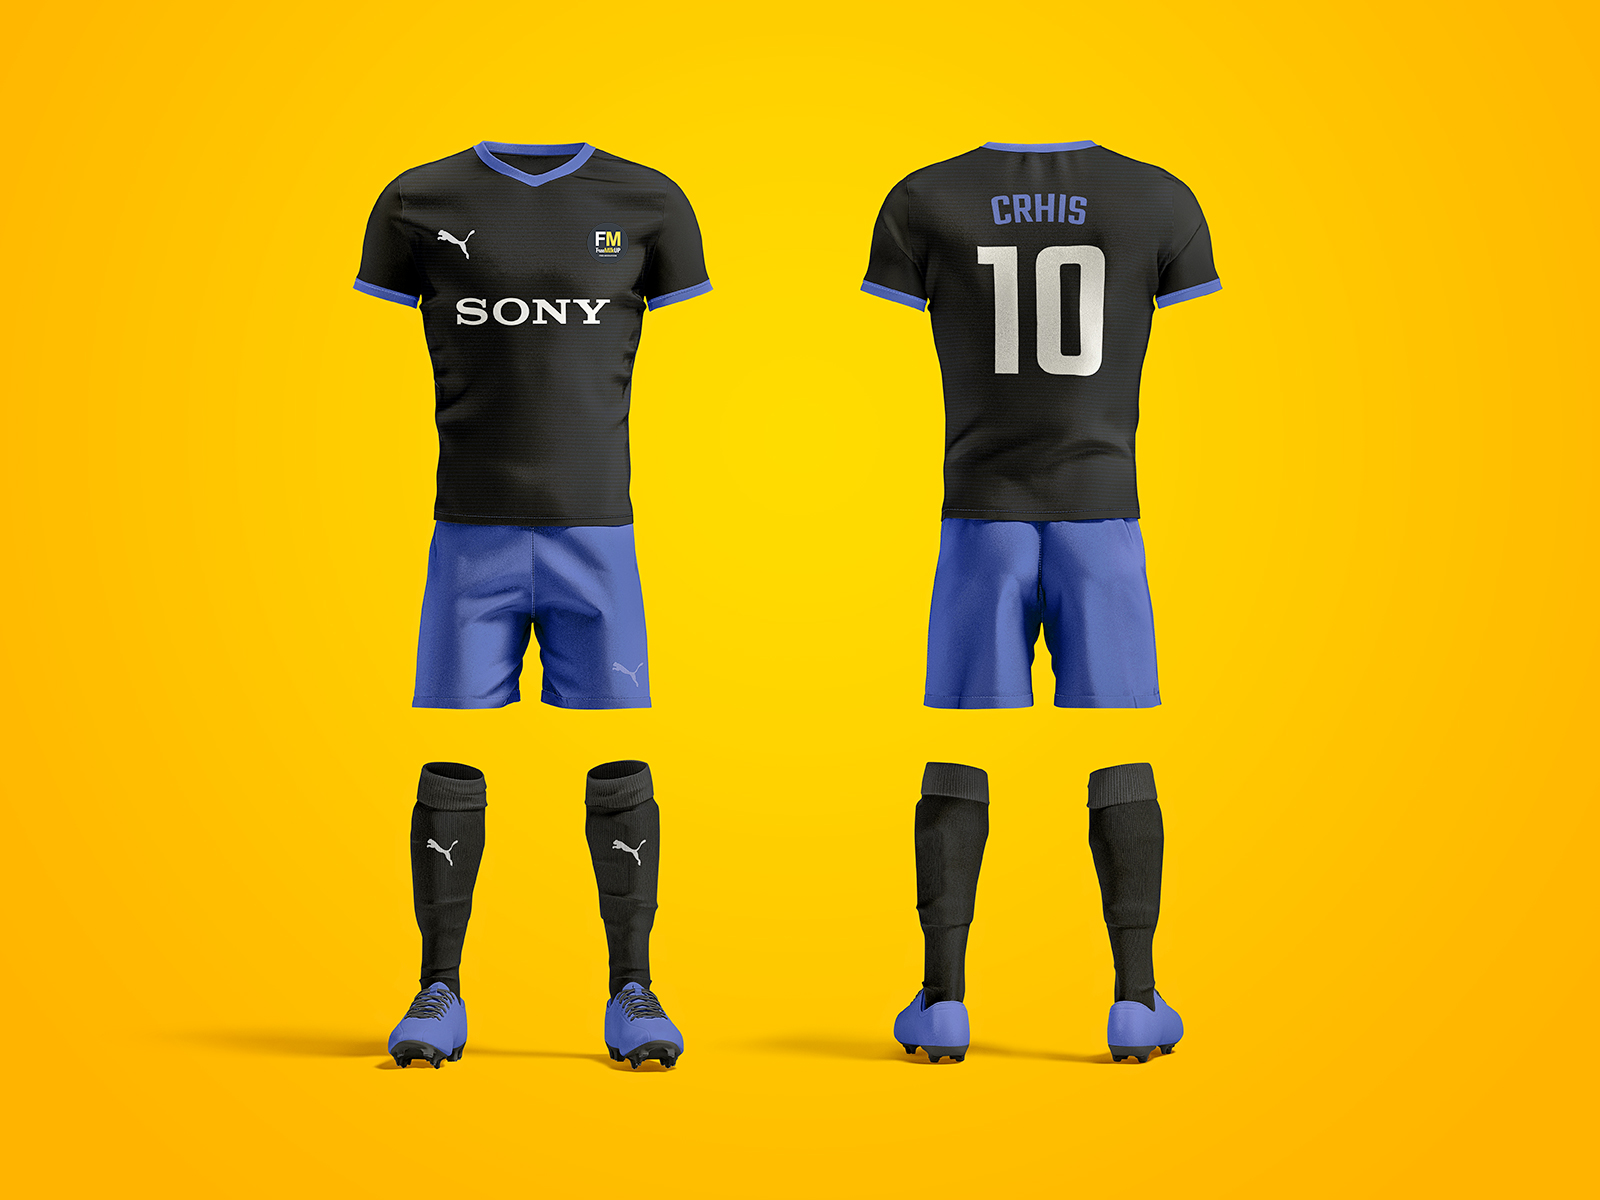 Soccer jersey mockup football jersey design sublimation sport t